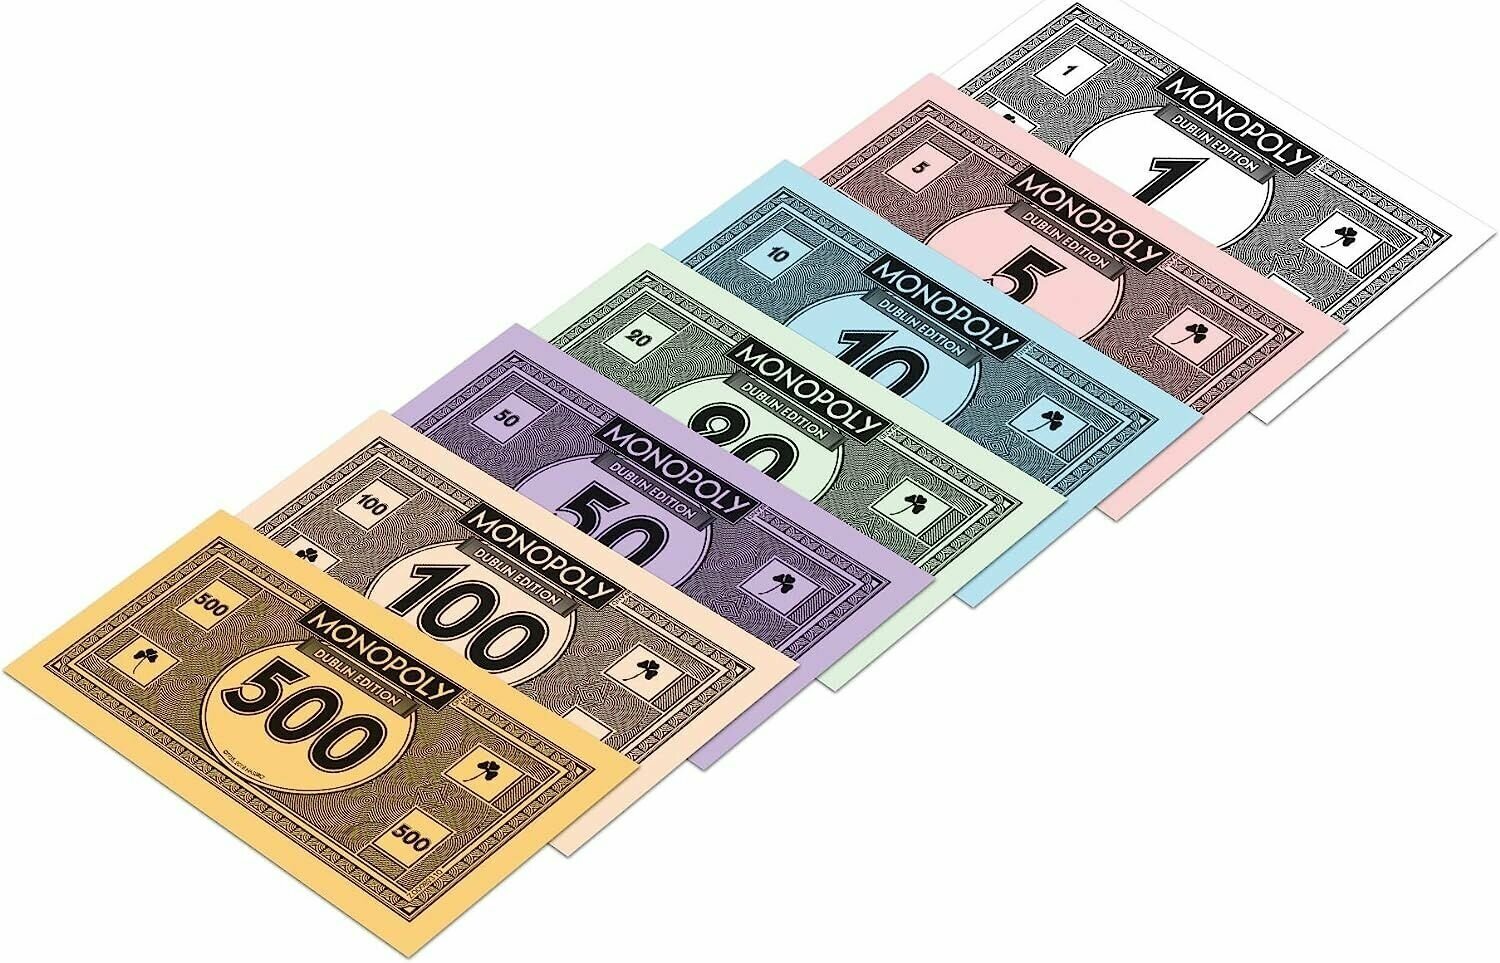 Monopoly tarjeta de credito